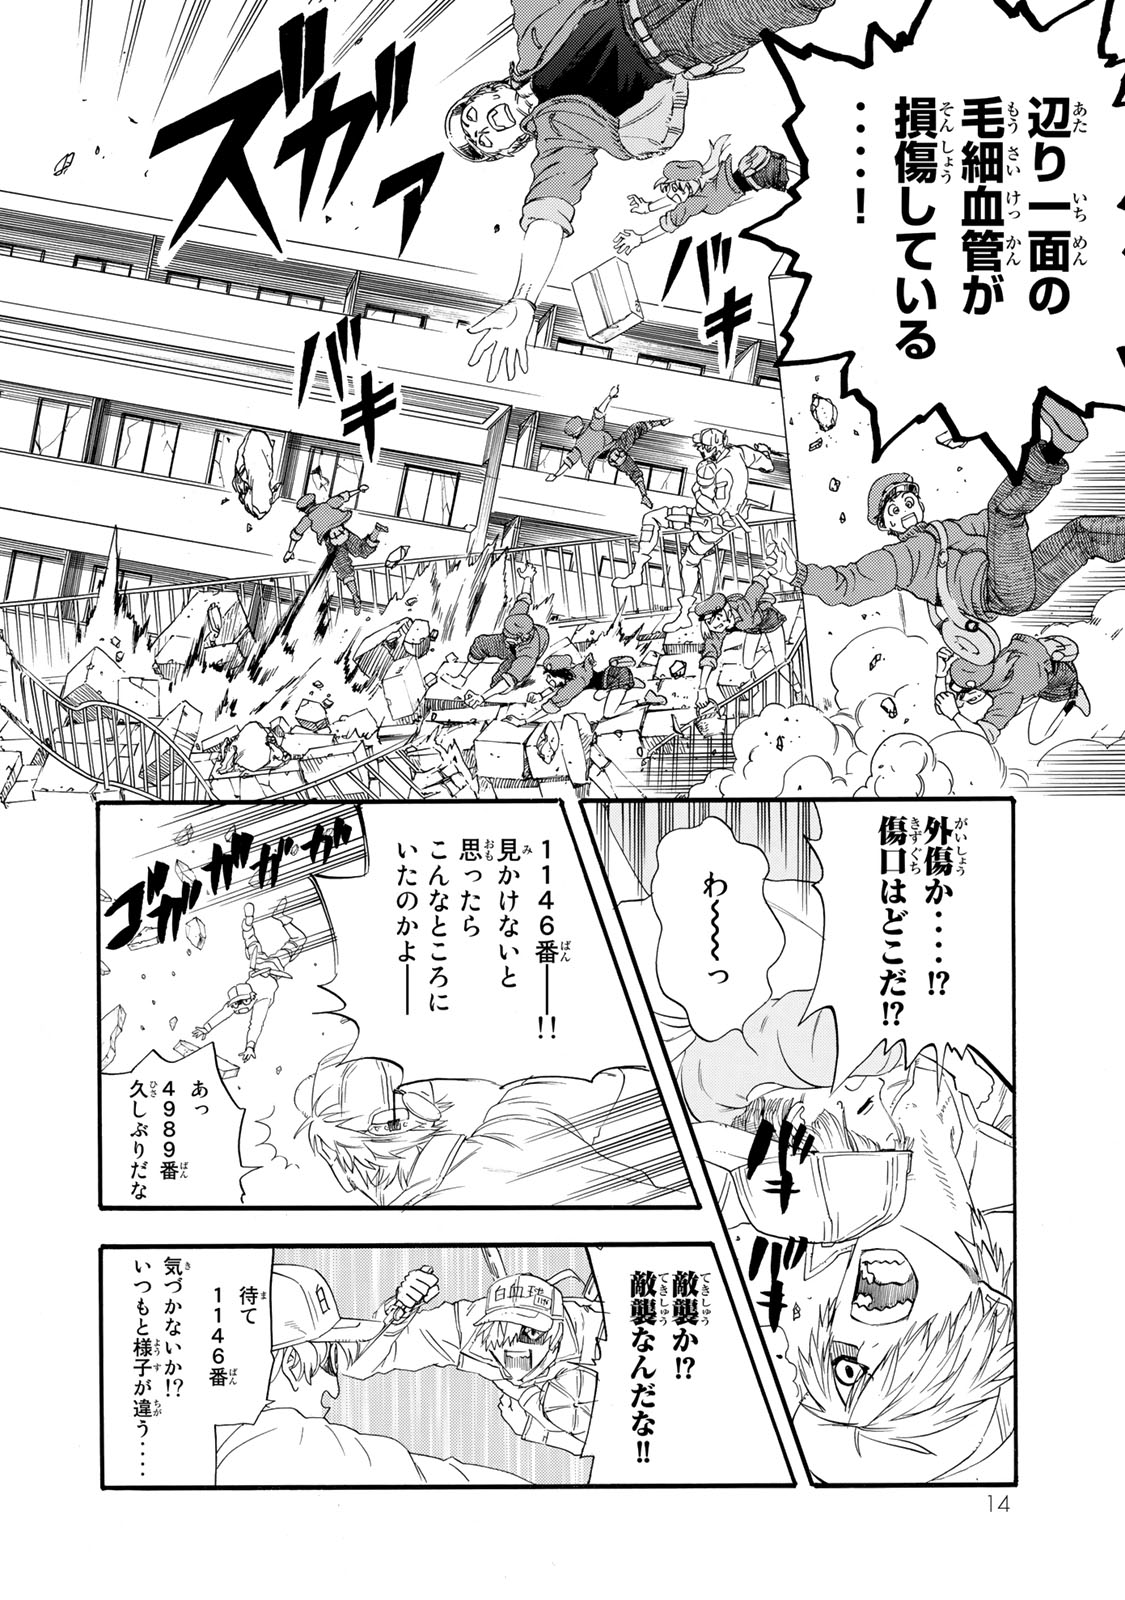 Hataraku Saibou - Chapter 26 - Page 16